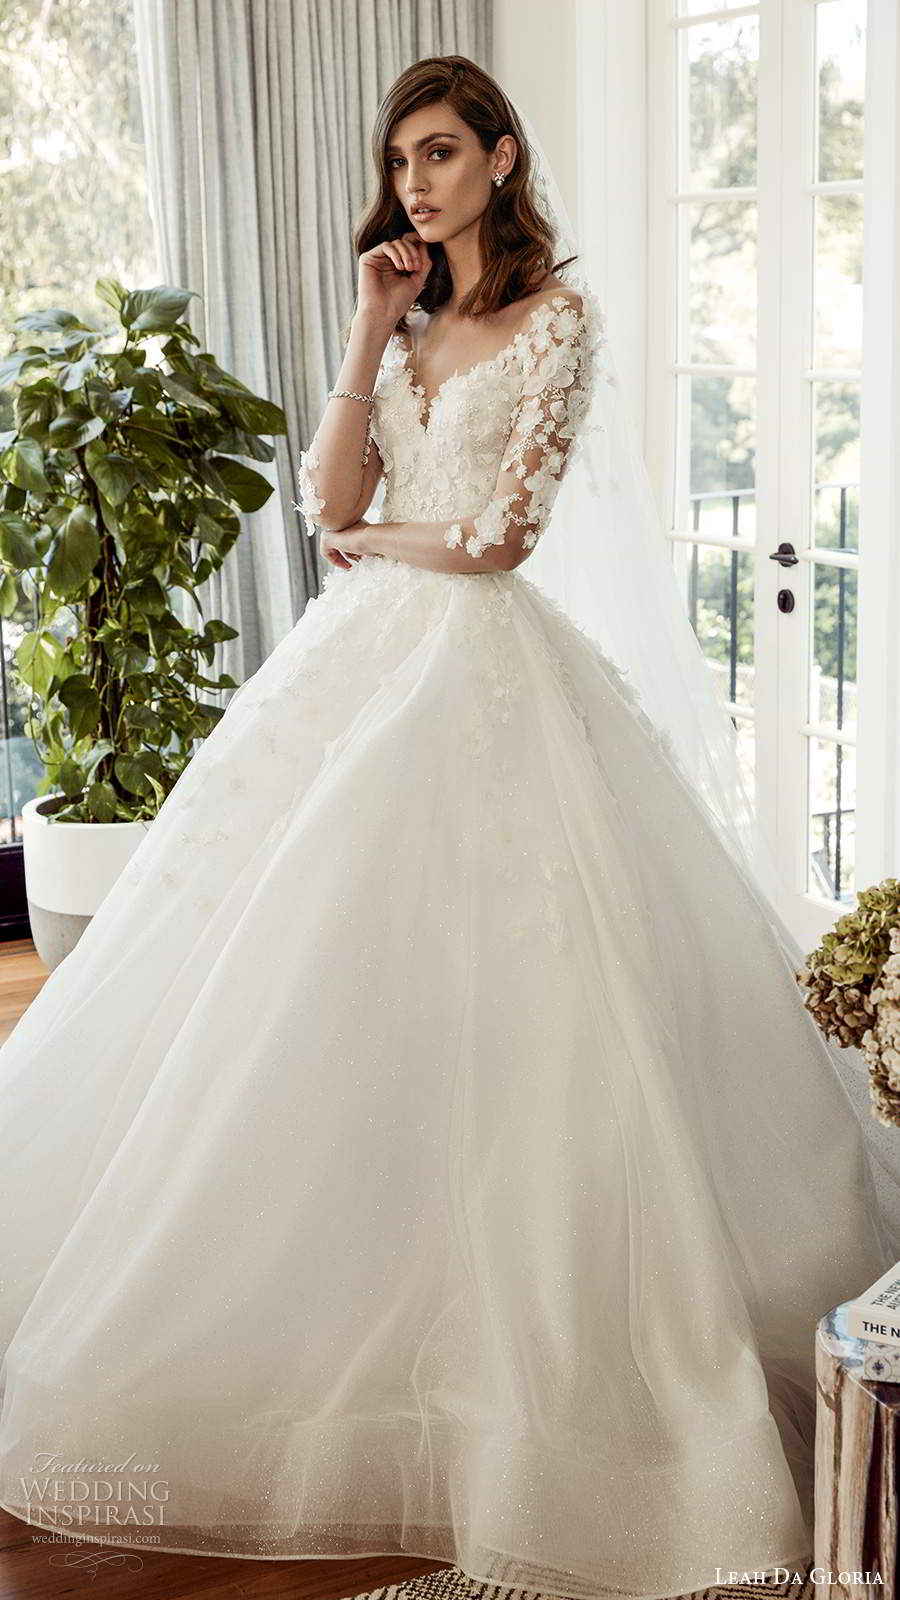 leah da gloria 2020 bridal couture illusion 3 quarter sleeves sweetheart neckline fully embellished ball gown wedding dress chapel train (4) mv